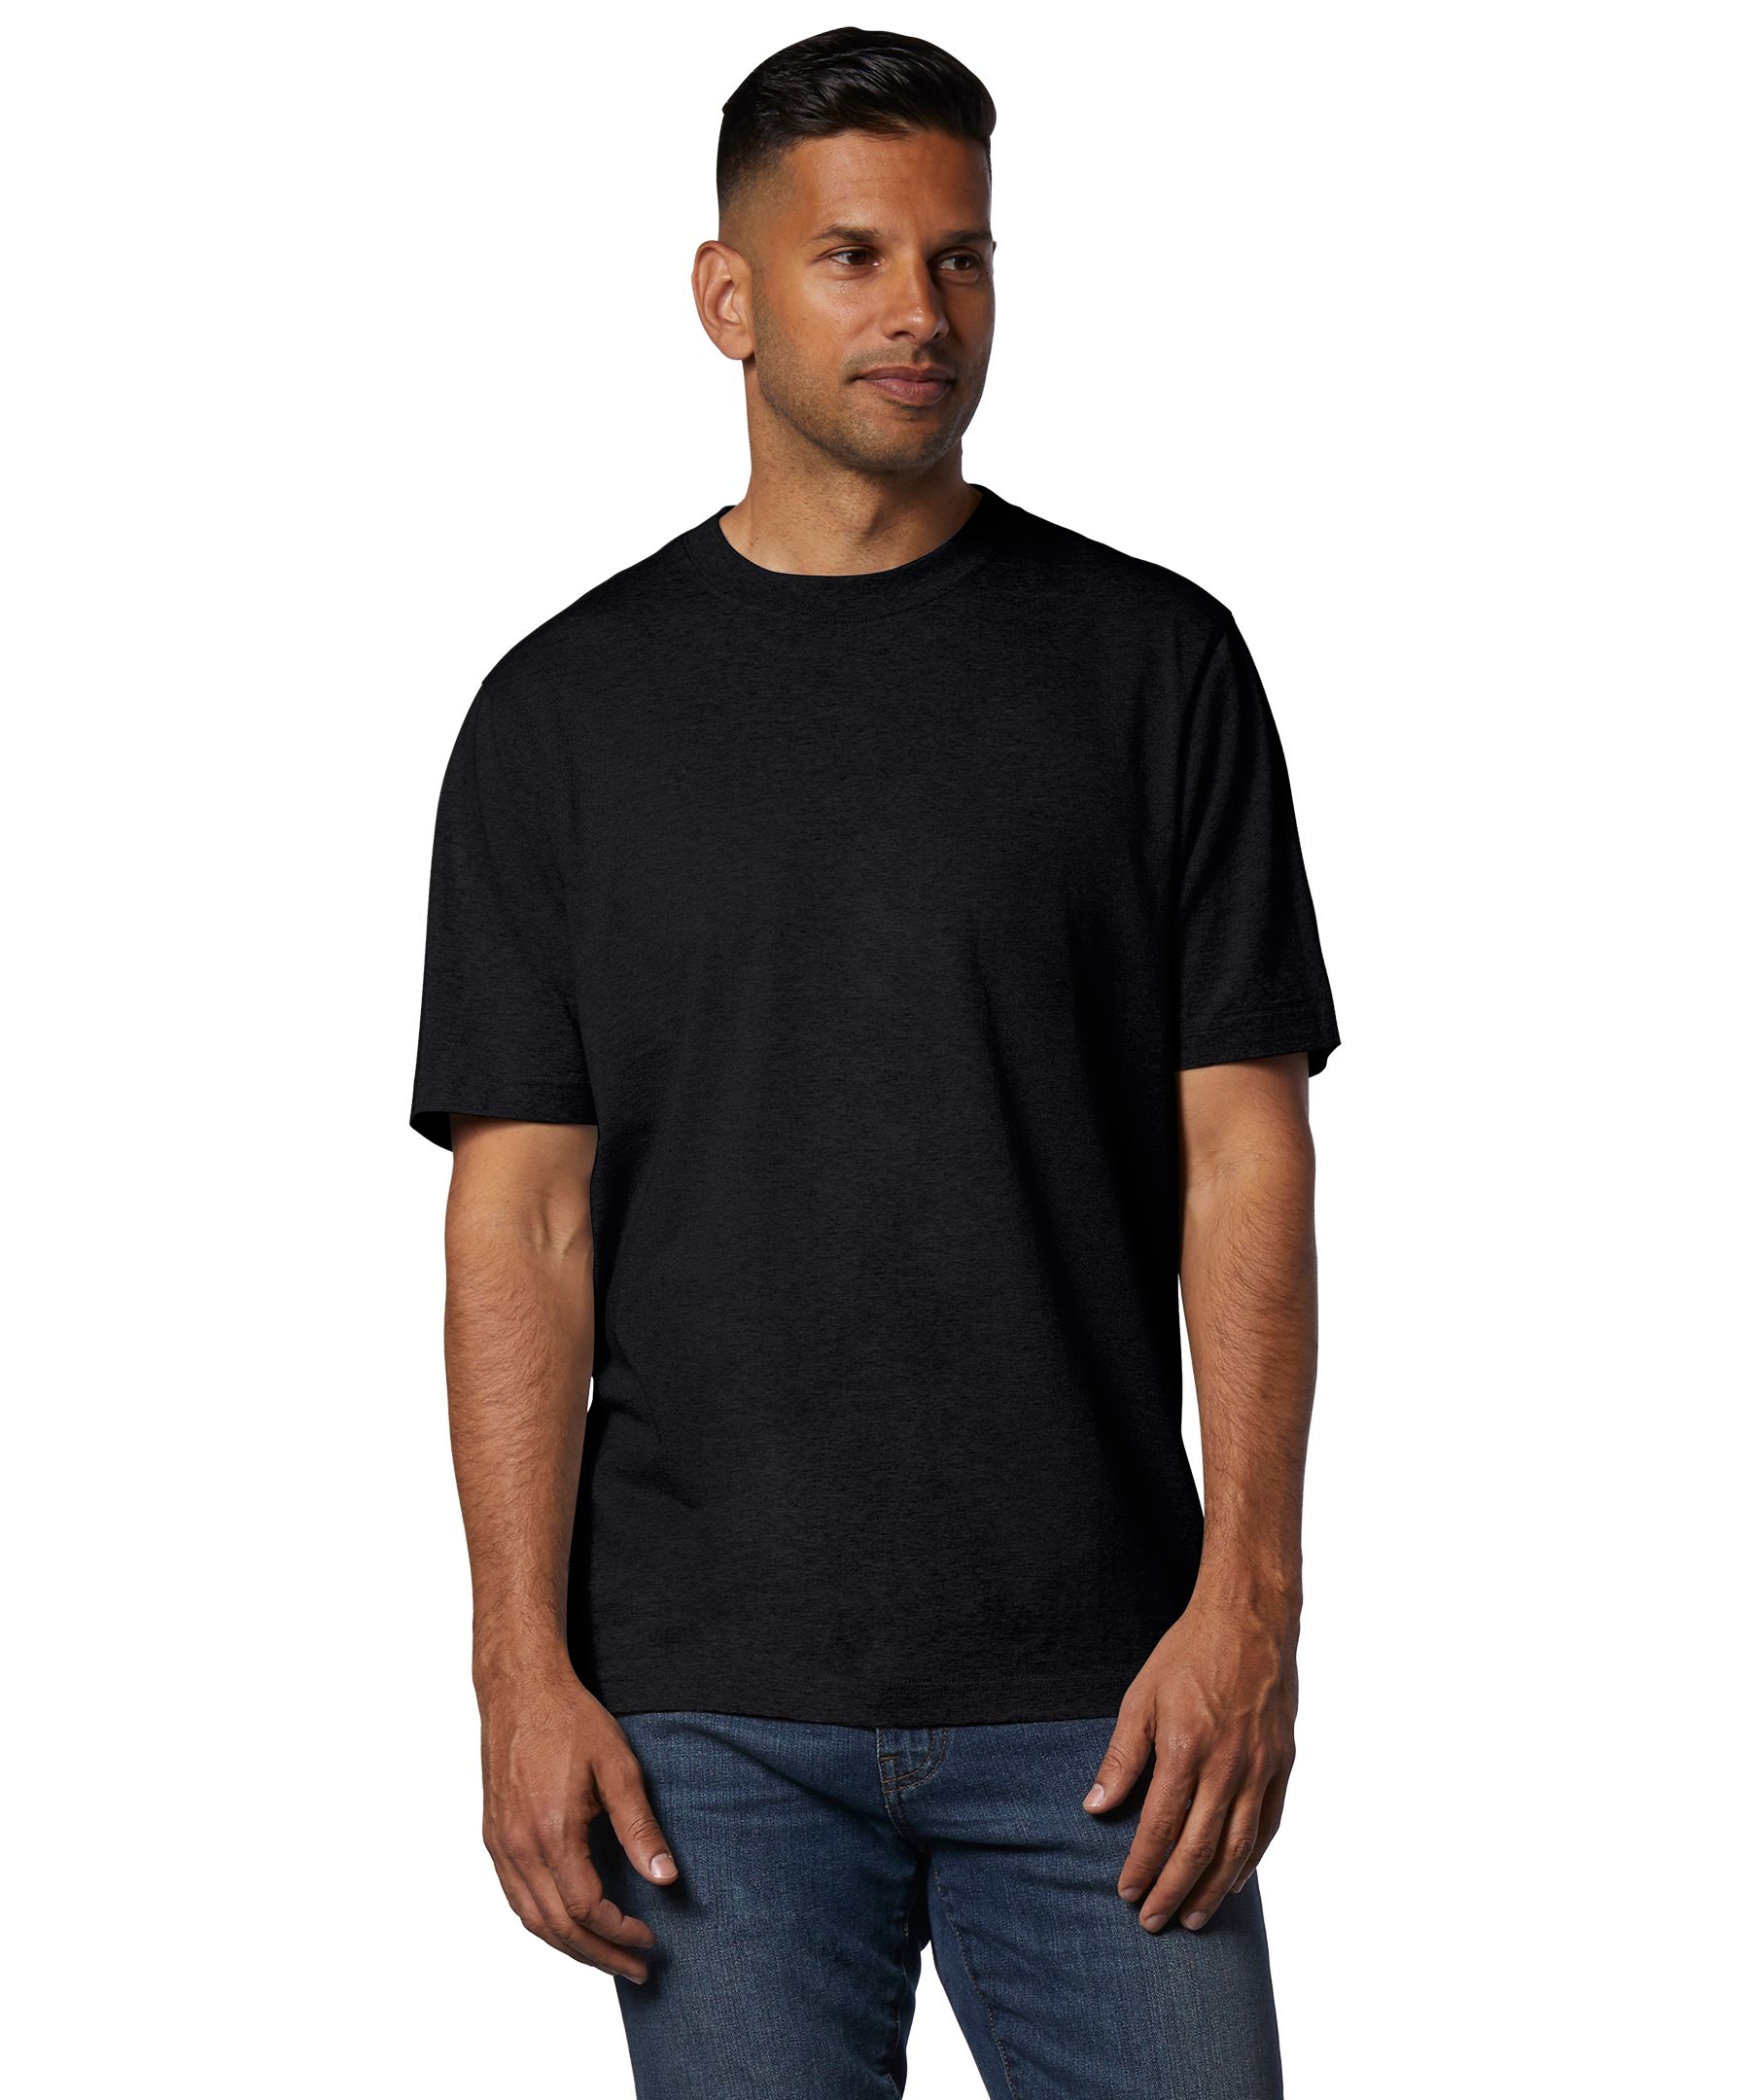  Mens Medium Shirts Men's T Shirt Breathable Short